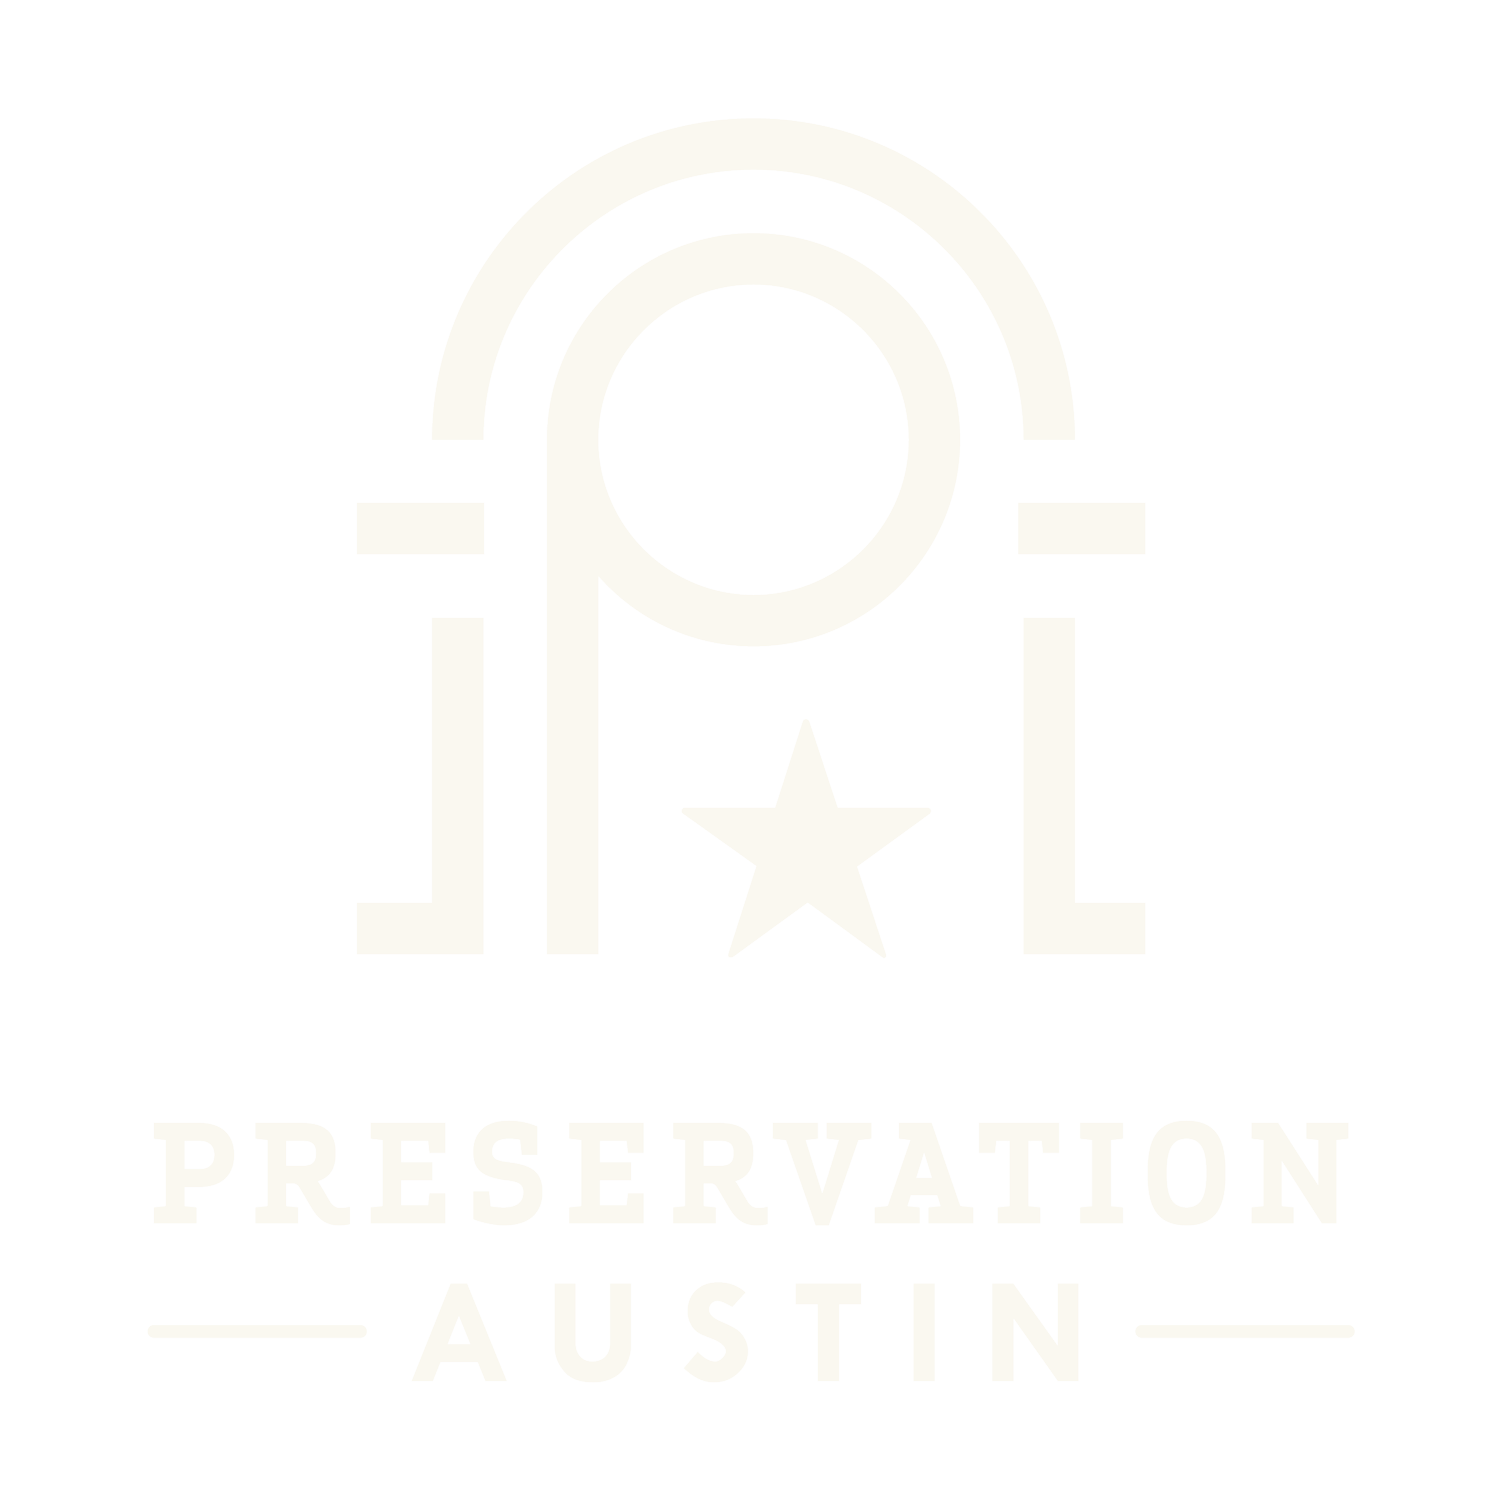 Preservation Austin